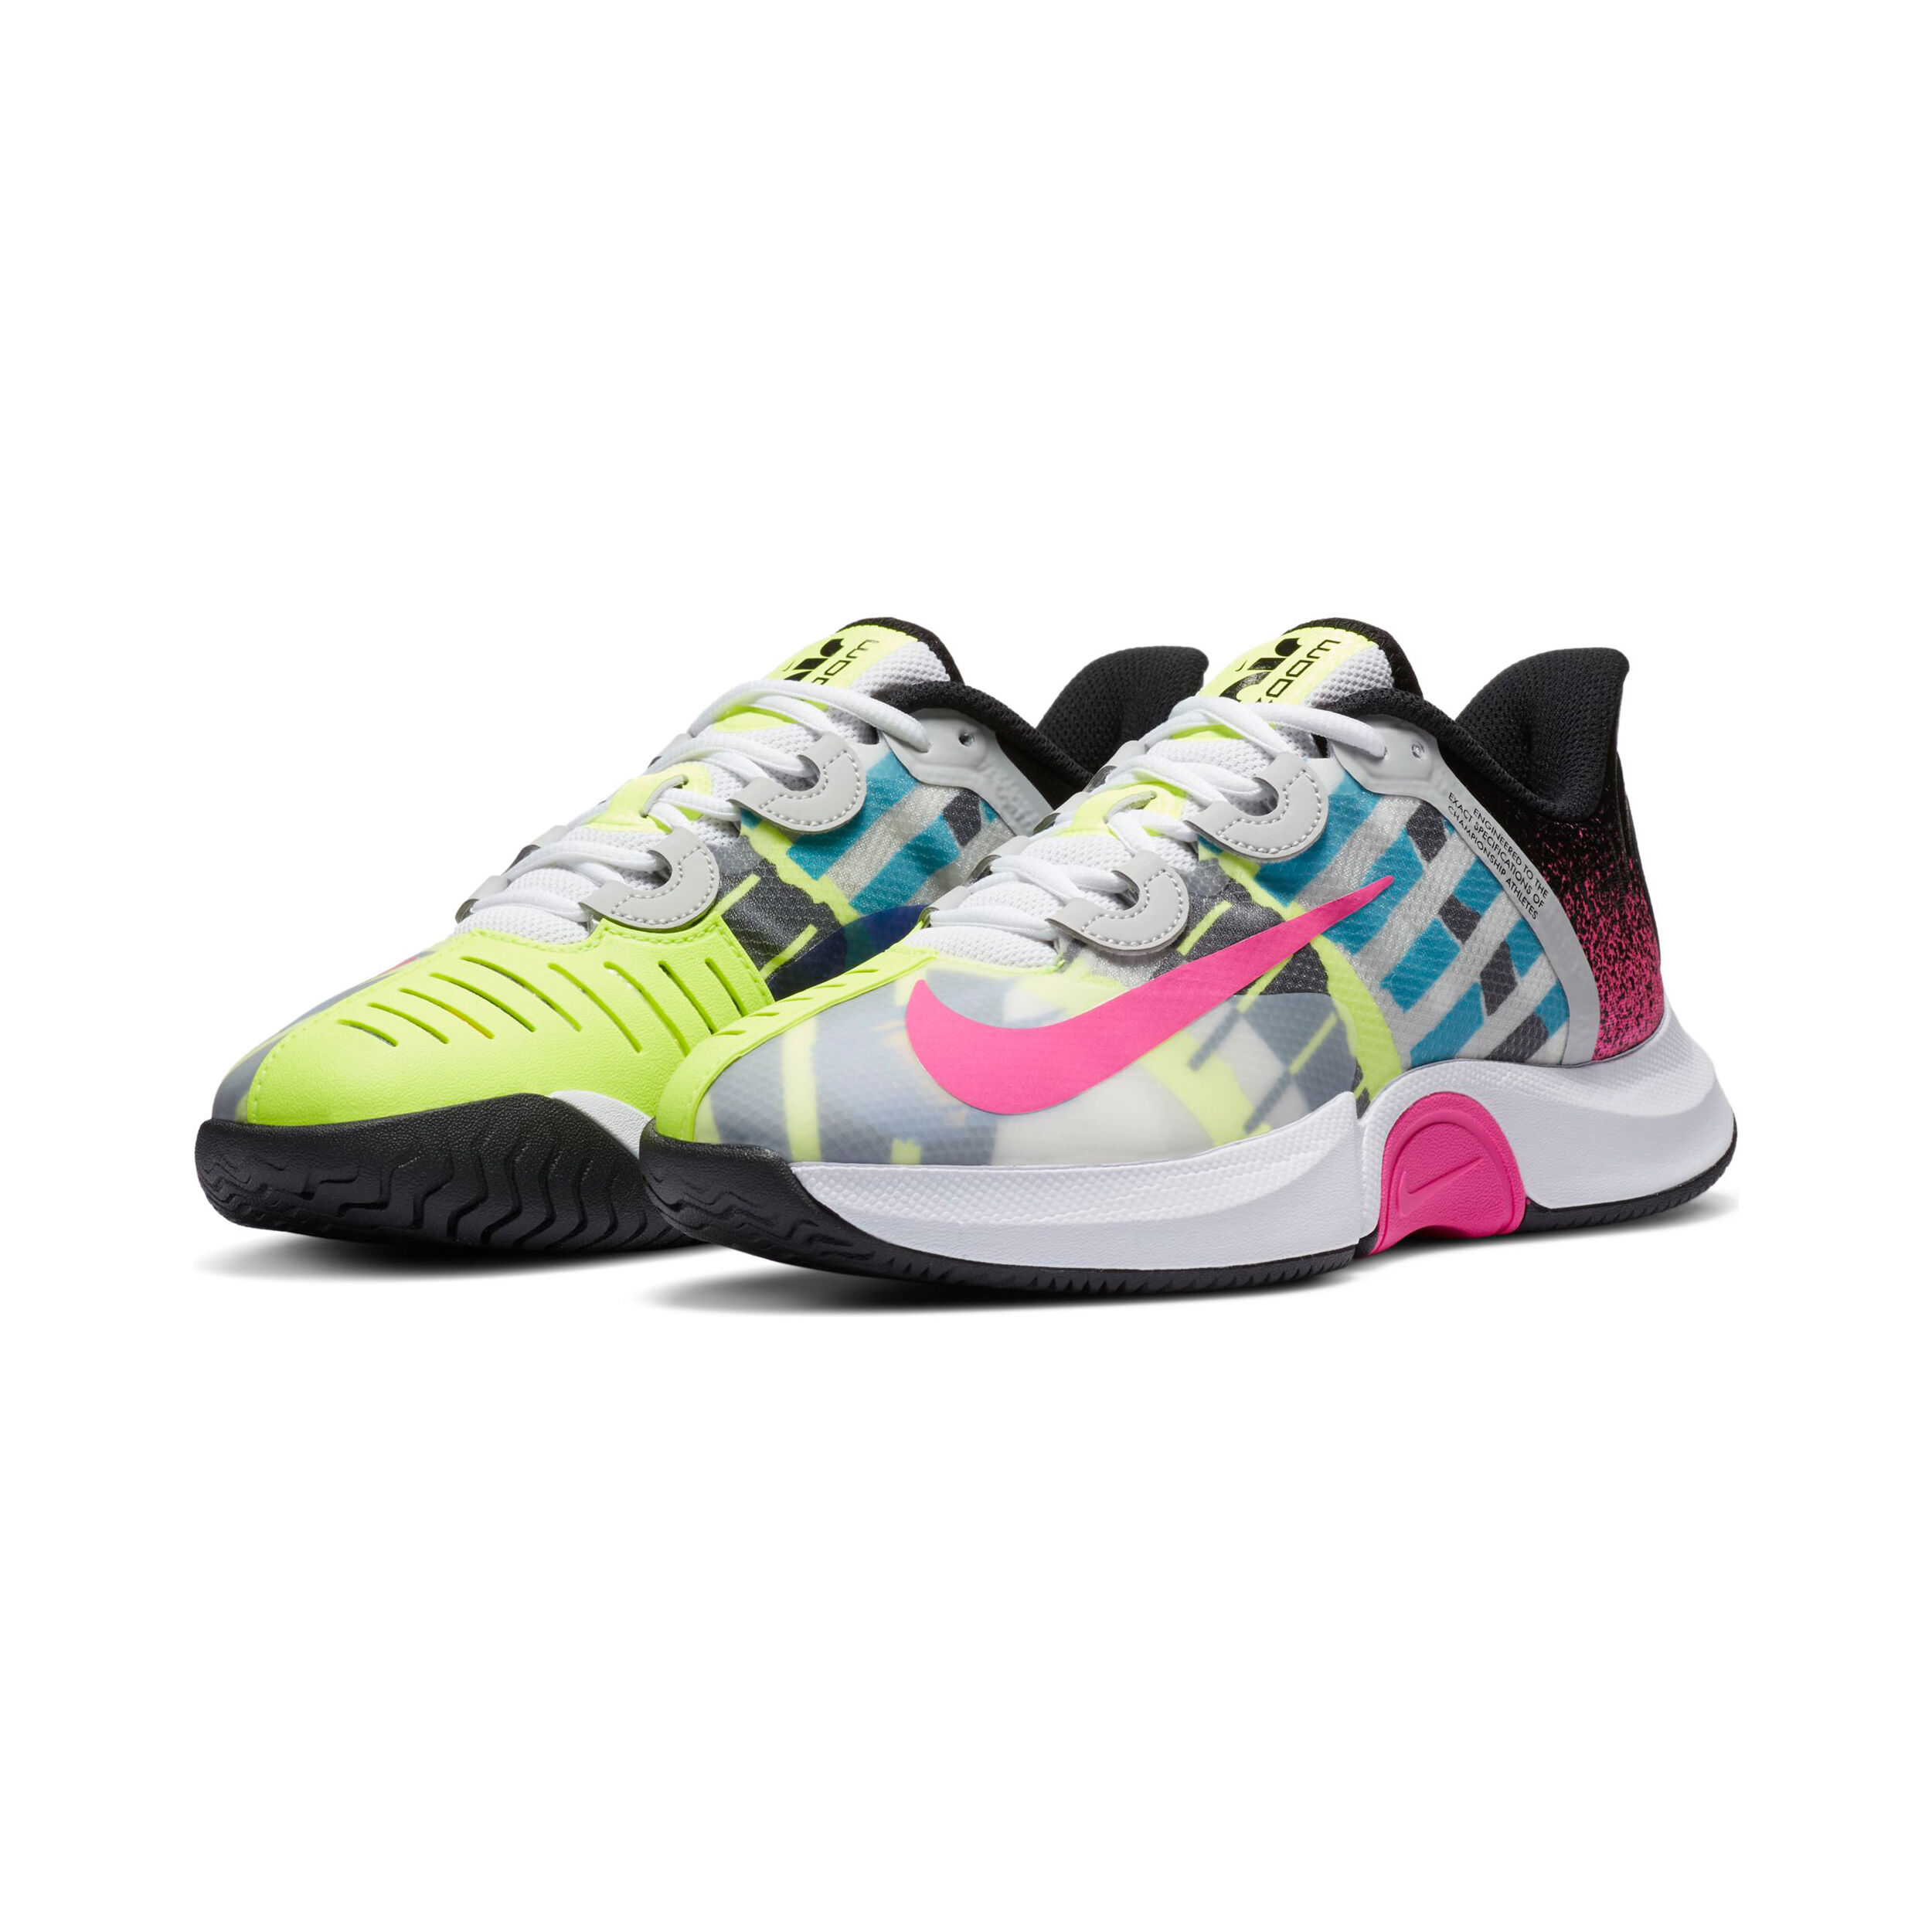 nike women's court air zoom gp turbo tennis shoes white and laser fuchsia